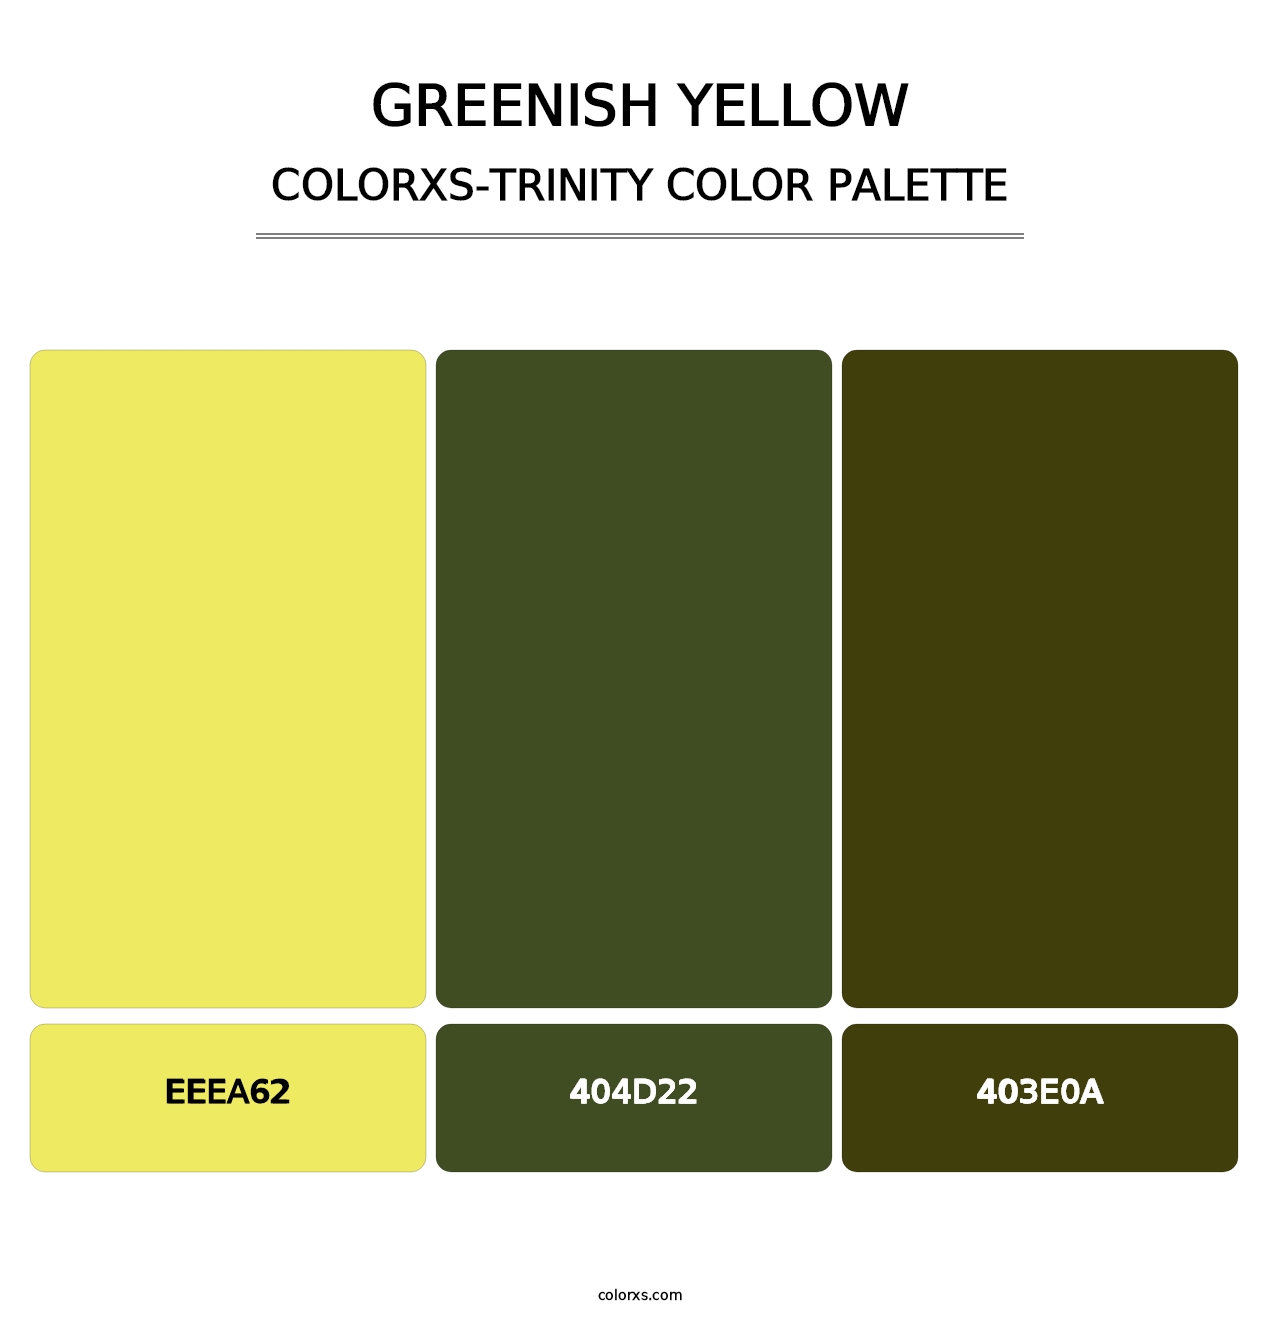 Greenish Yellow - Colorxs Trinity Palette